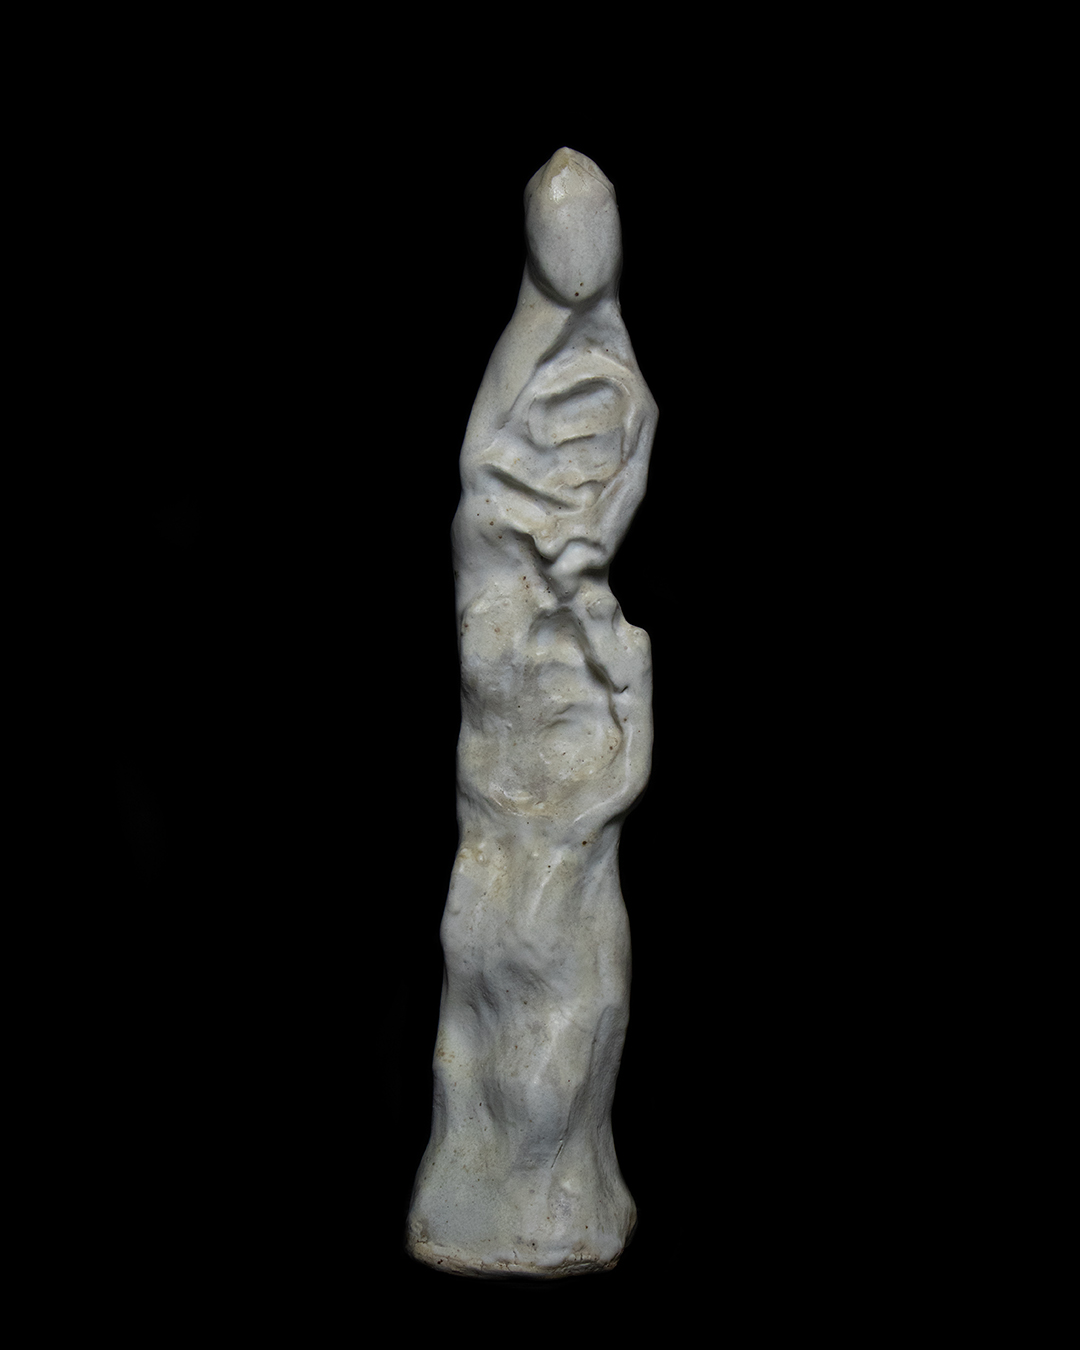 Nicolas-Pierre Réveillard, sculpture "Attente" - "Waiting" (4)